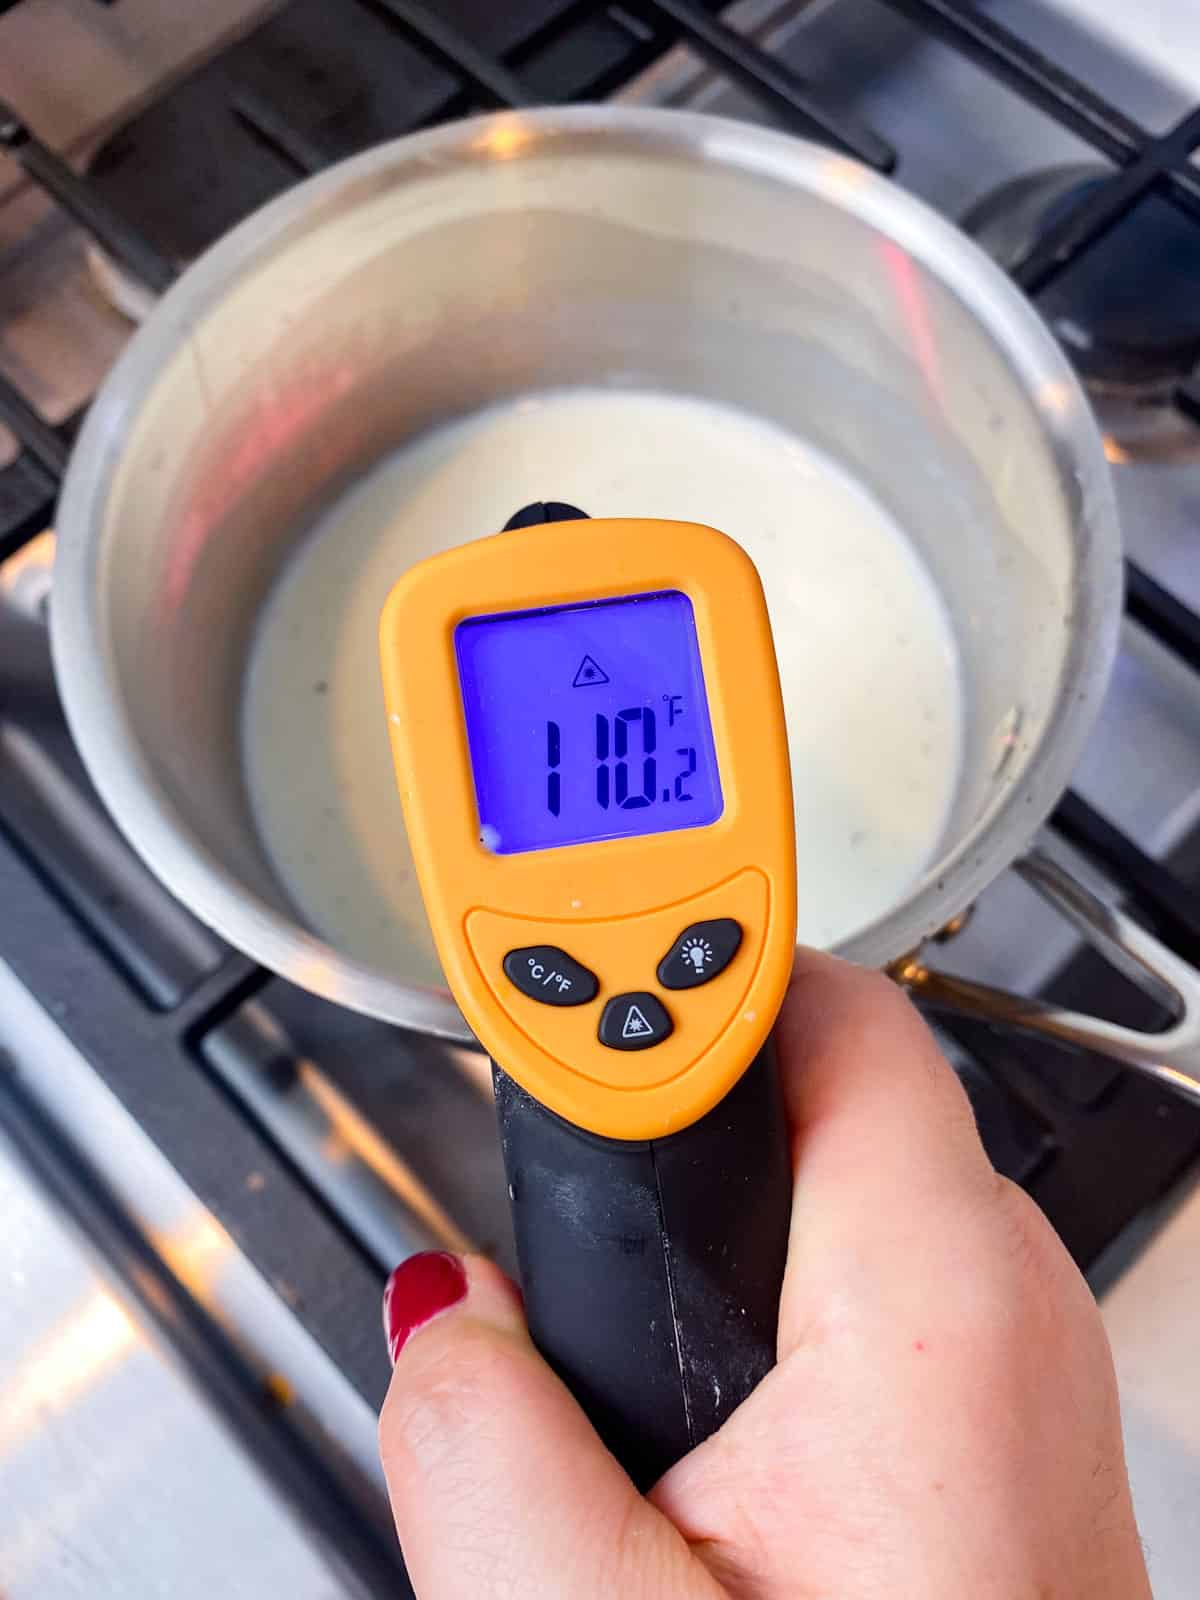 Heat milk to 110 degrees Fahrenheit.